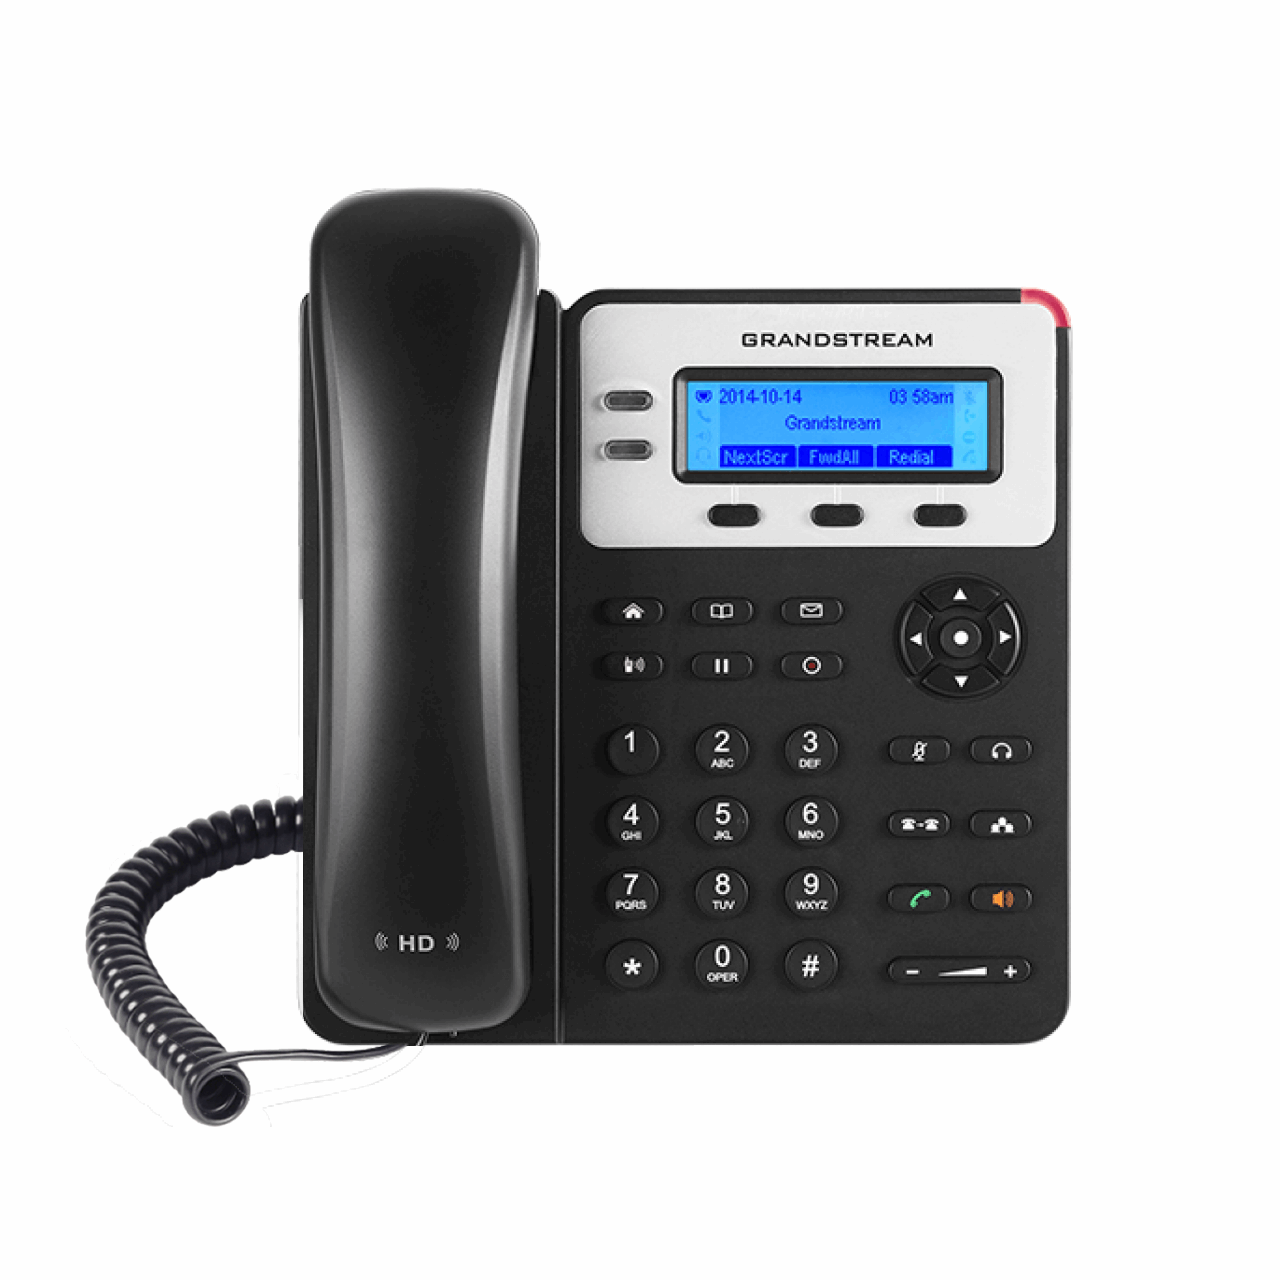  Phone Grandstream GXP 1625 ا تلفن تحت شبکه گرنداستریم GXP 1625 کد 269089